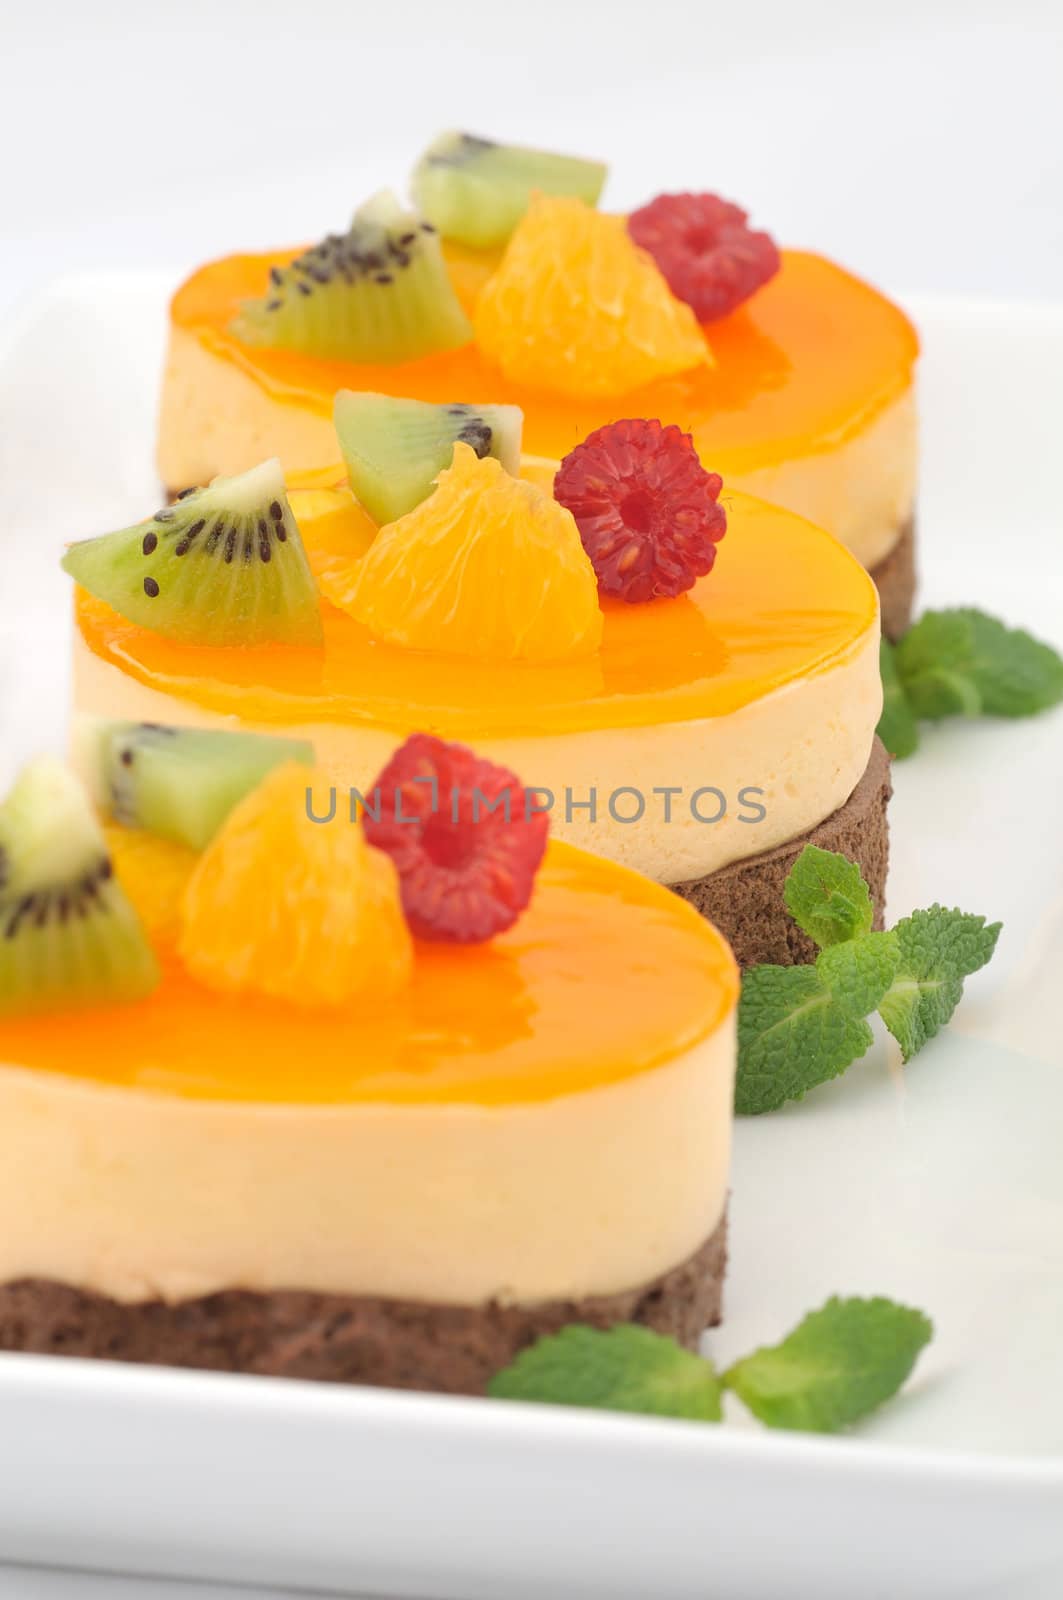 Chocolate and orange cakes by Hbak